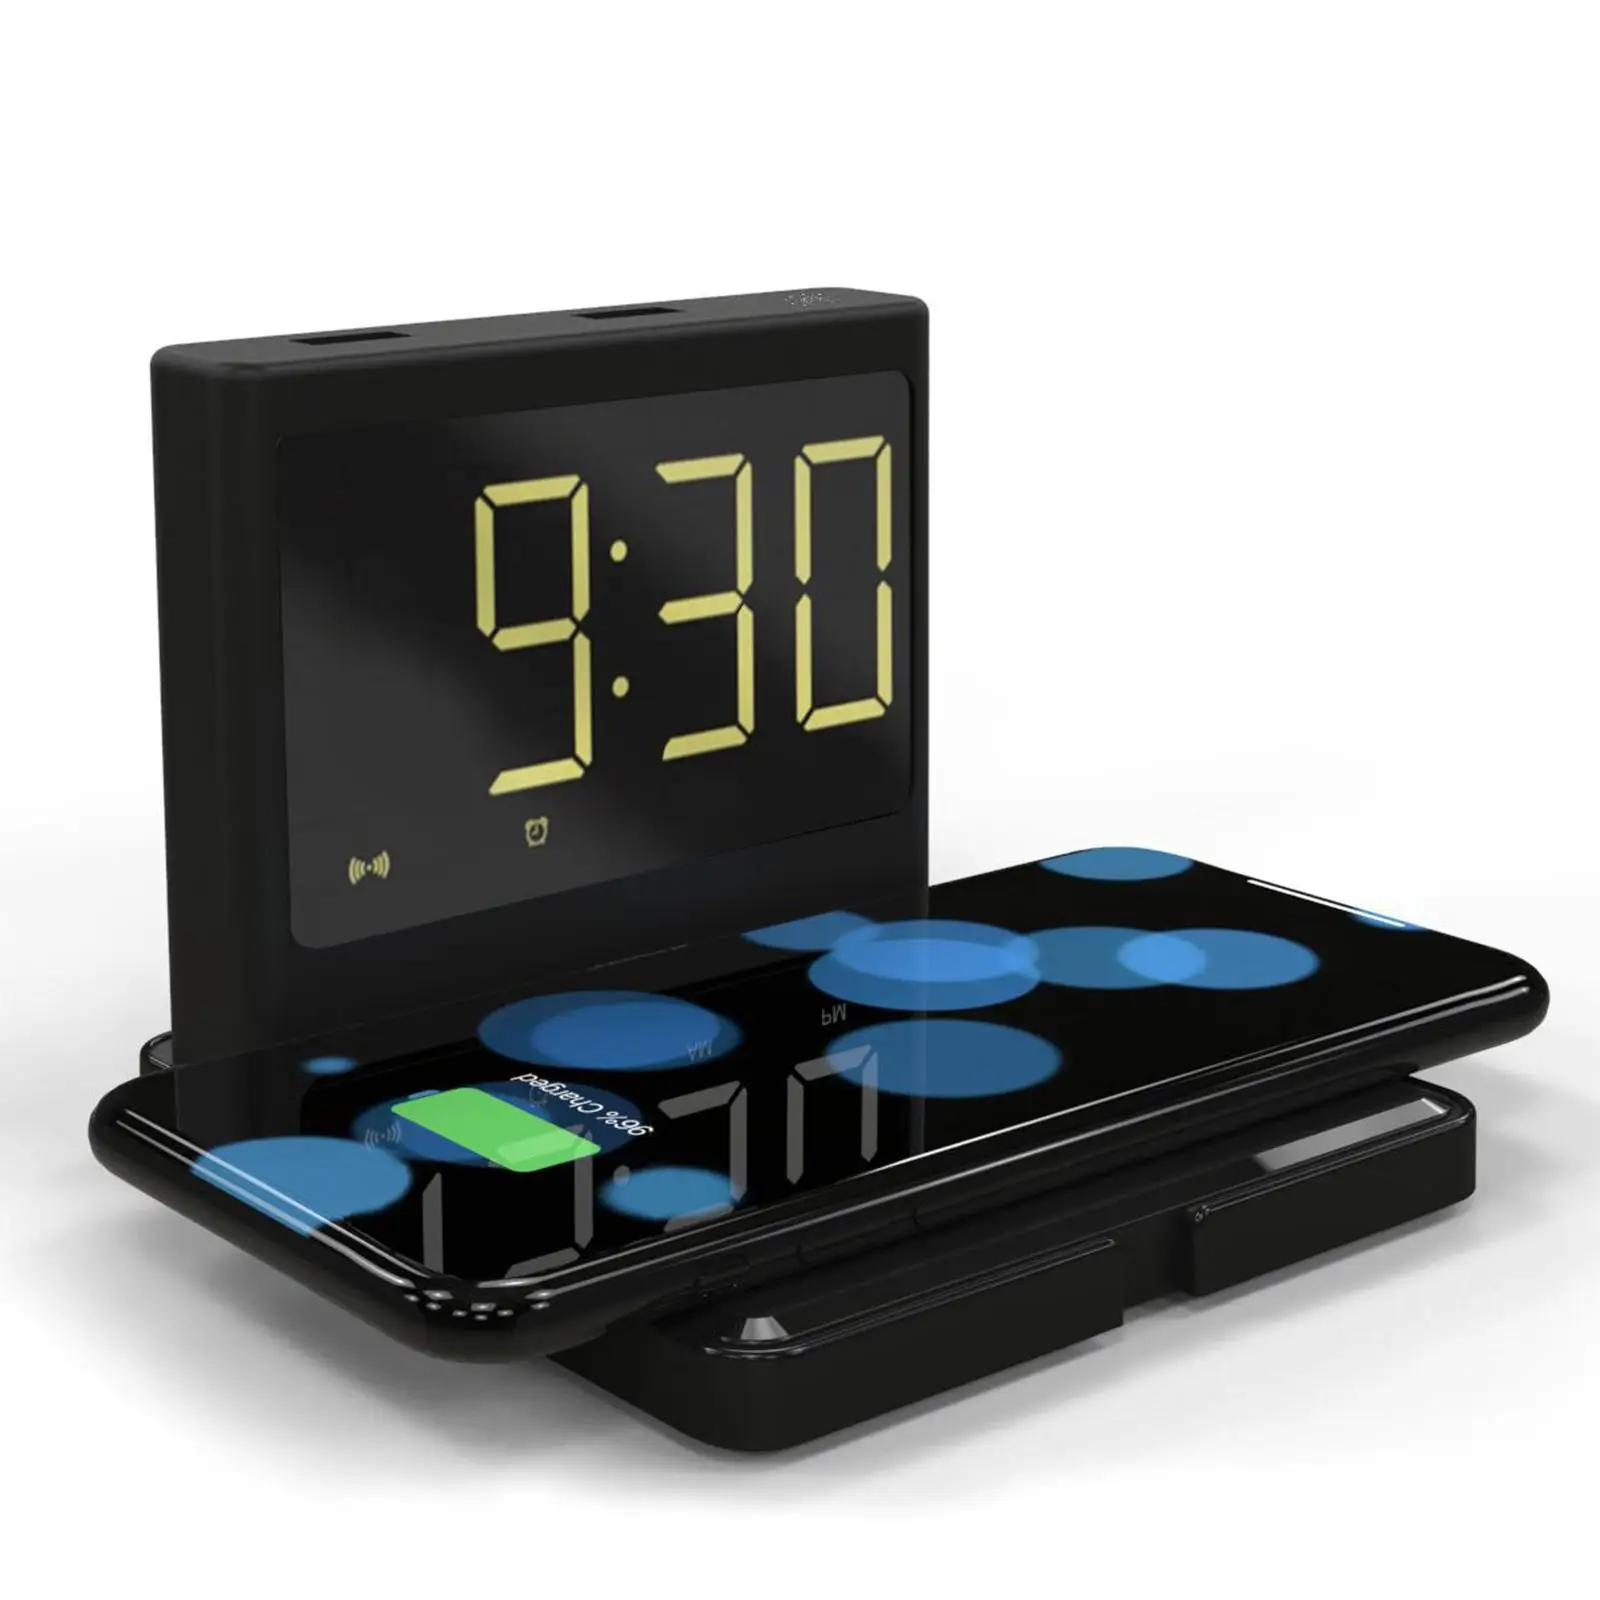 Fast Wireless Charging Digital Alarm Clock, Snooze, 3.4 Inch Screen for Bedroom, Office, Hotel, Desk